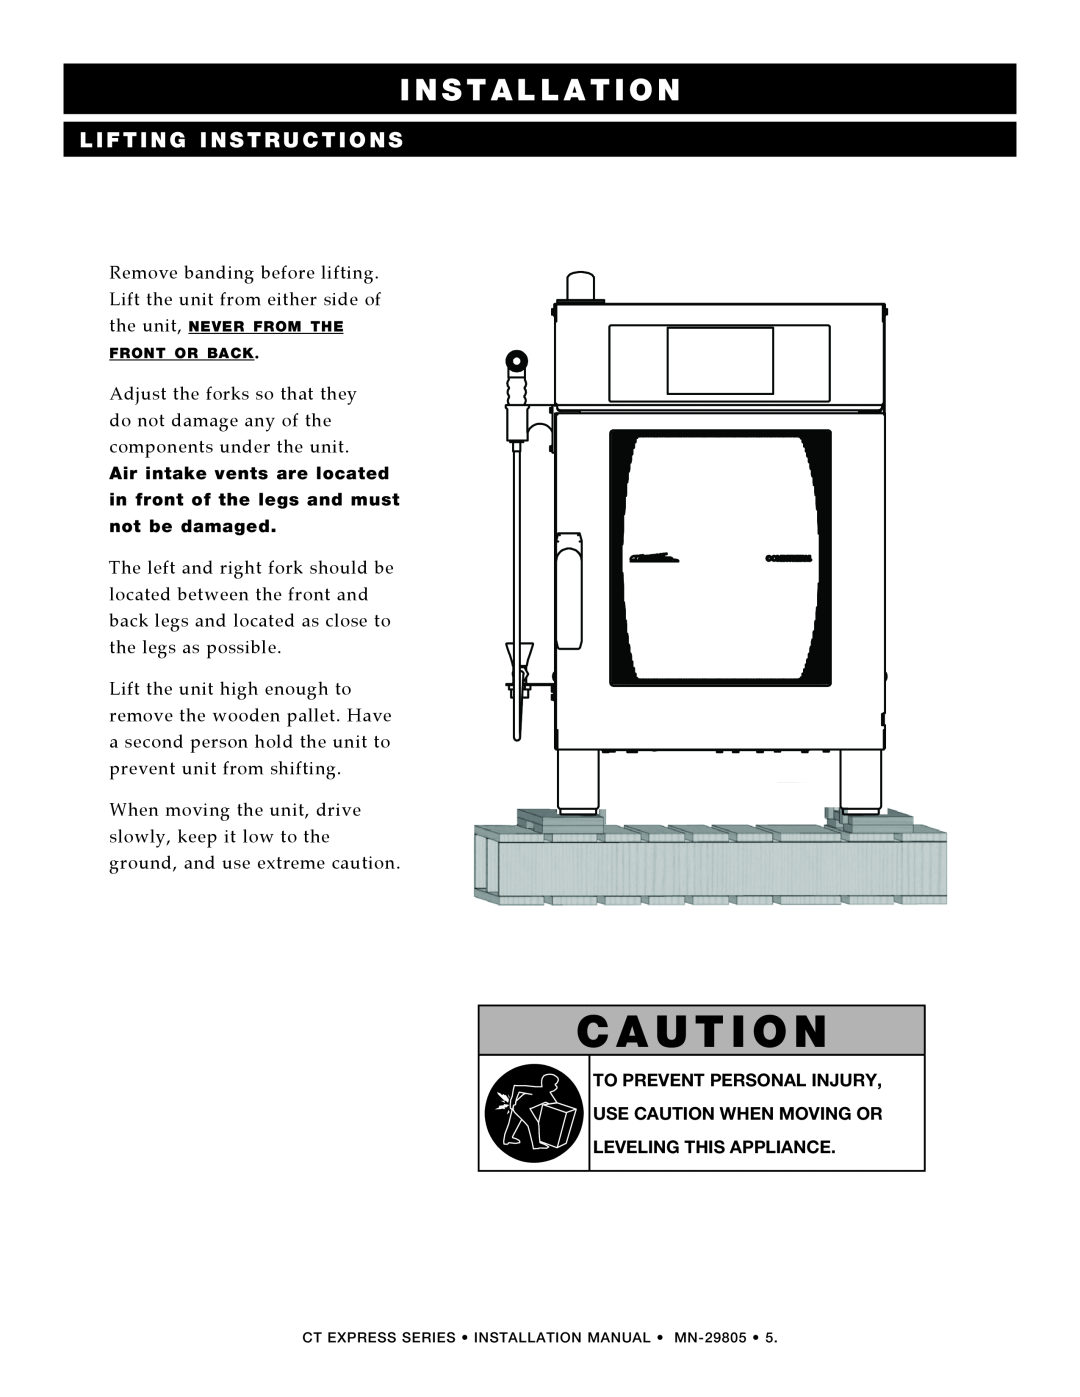 Alto-Shaam Combination Oven/Steamer manual Lifting Instructions, C A U T I O N, I N S T A L L A T I O N 